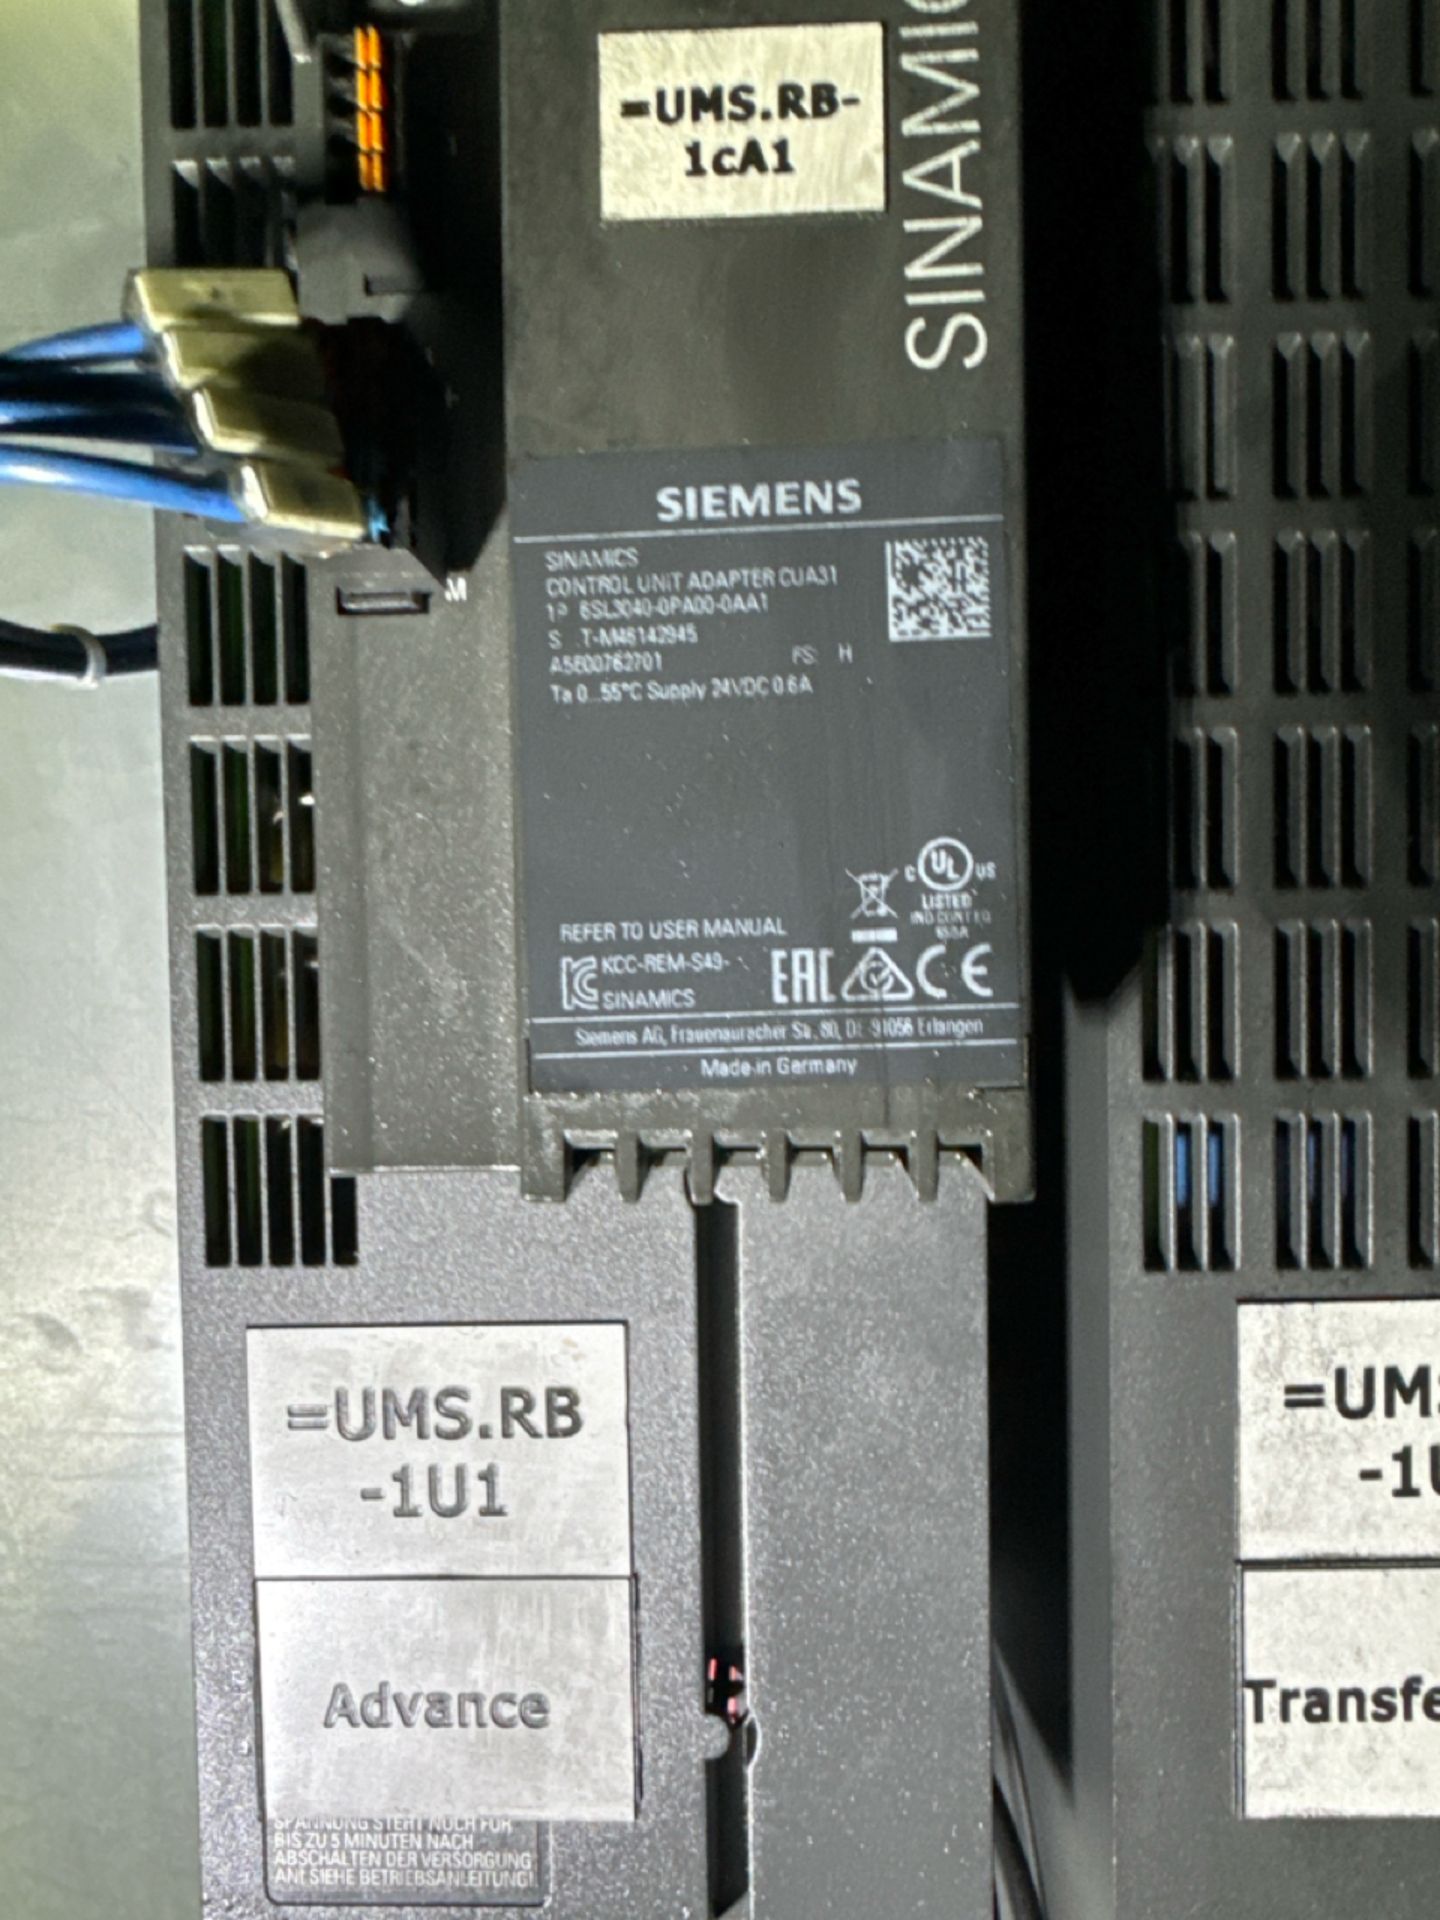 Siemens Sinamics Control Adapter CUA31 2x Units - Image 2 of 3